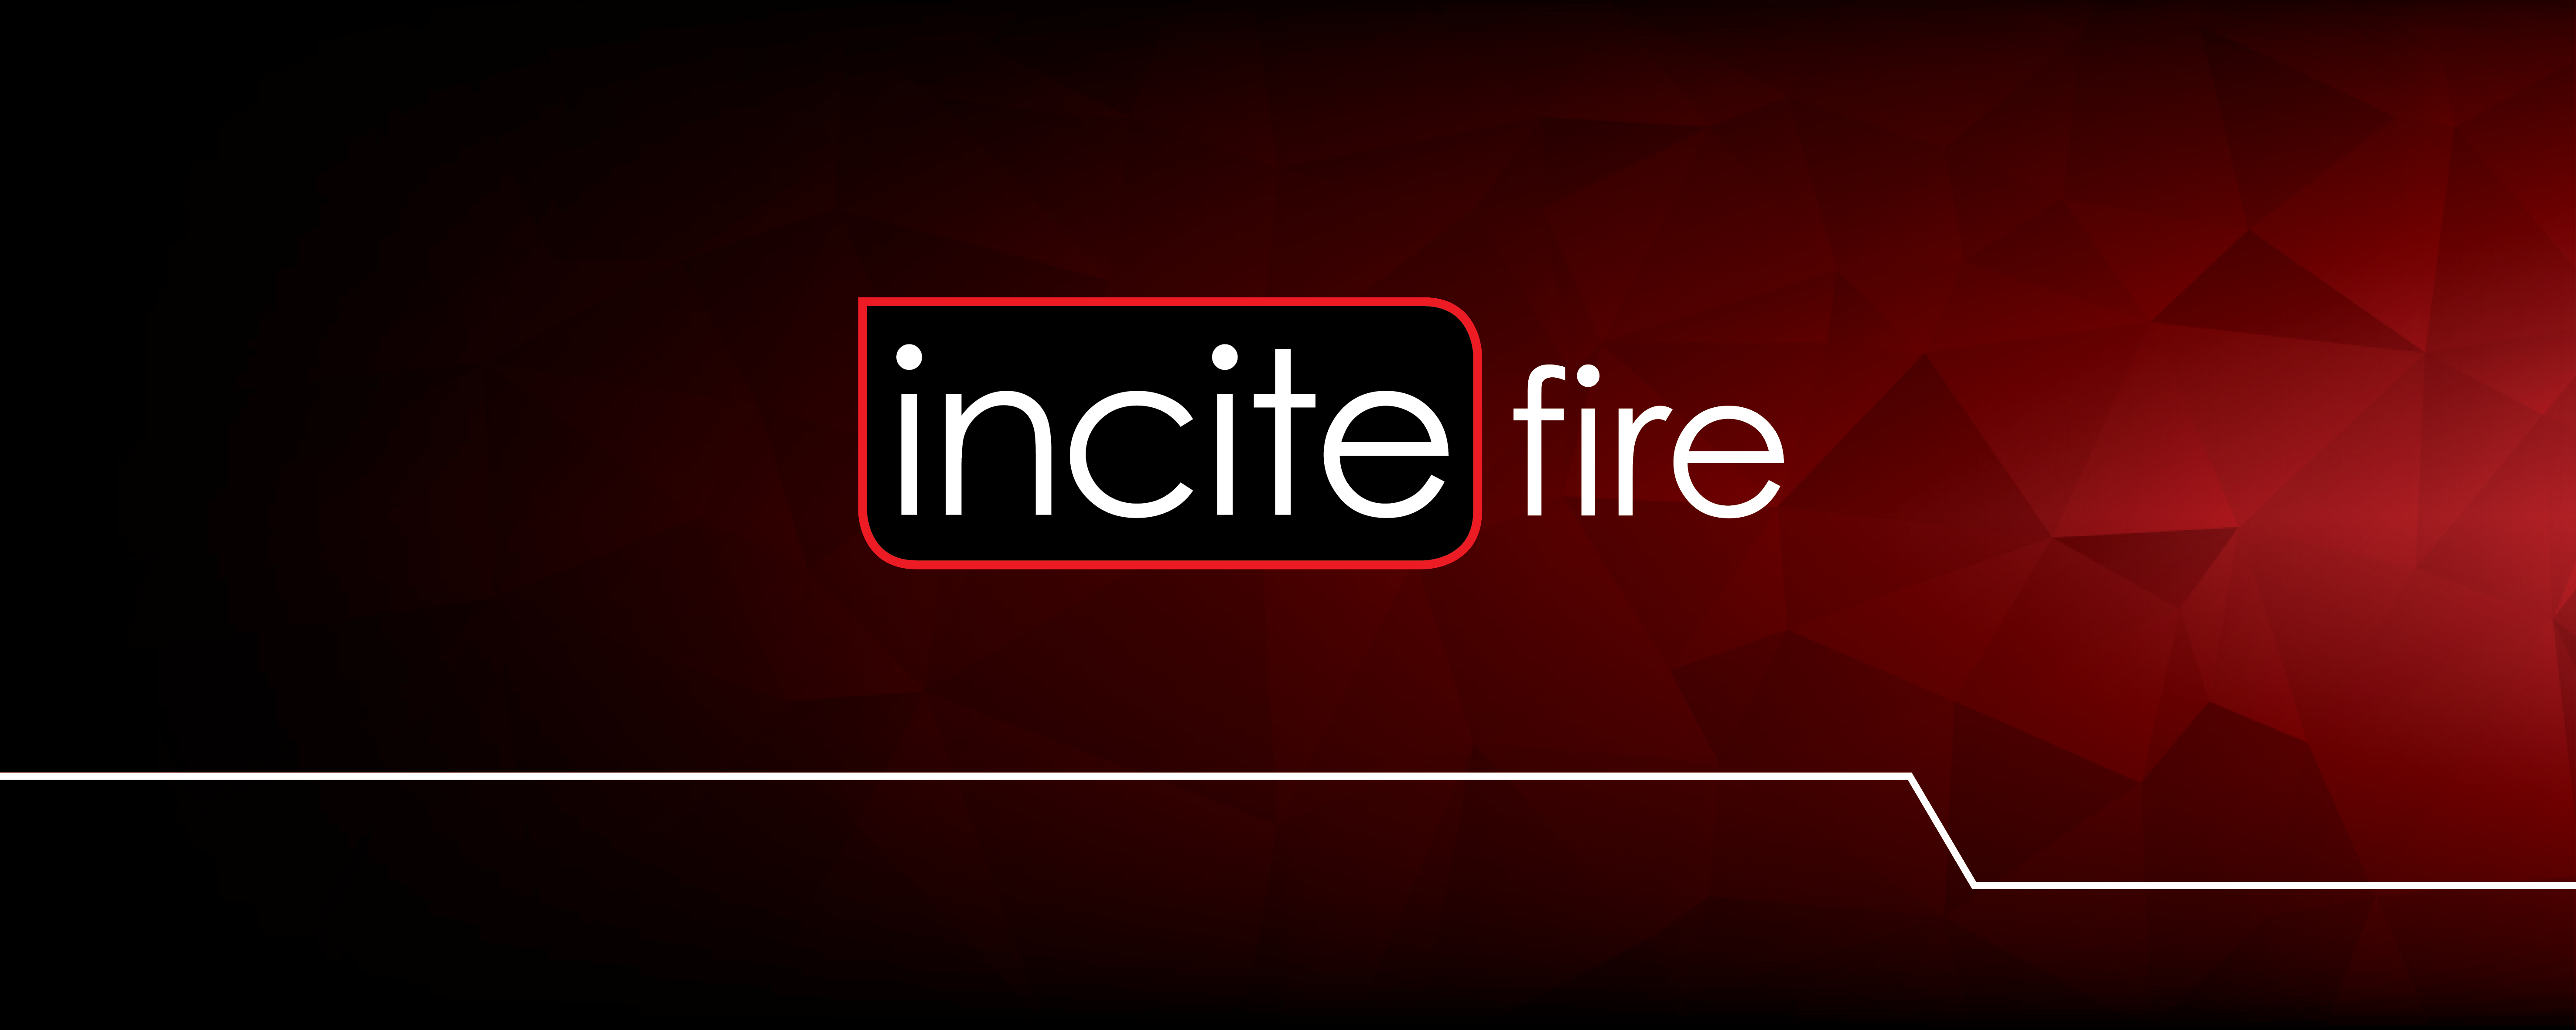 Incite Youtube Video